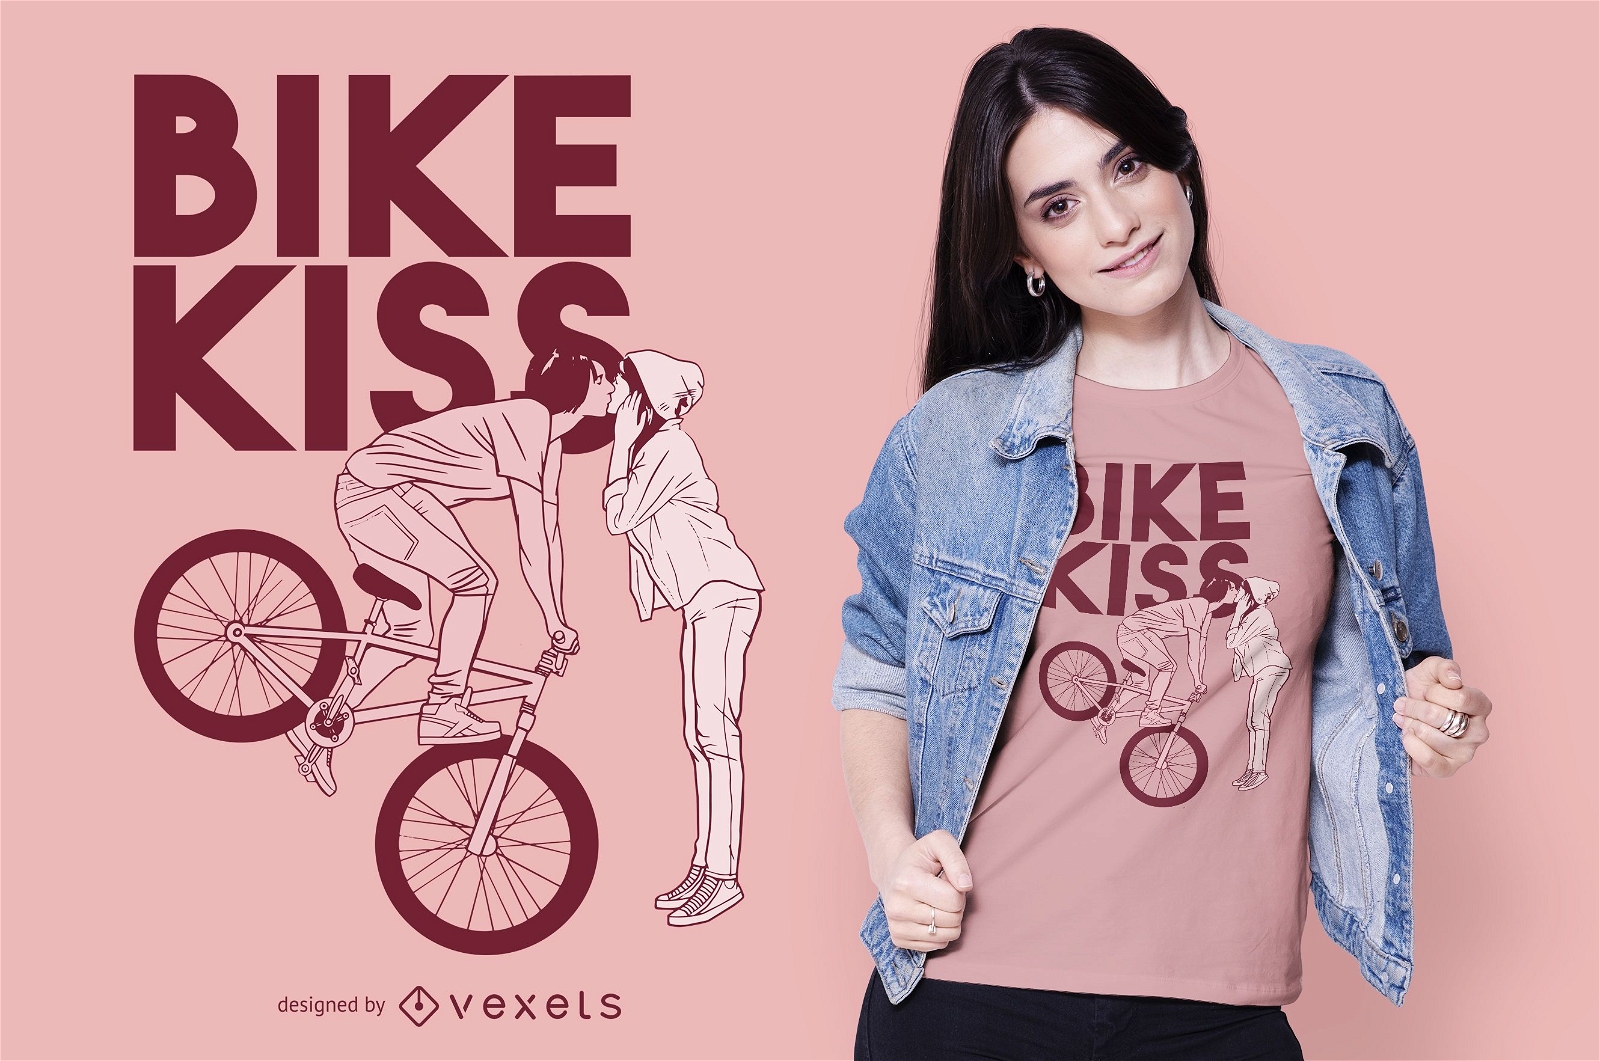 Bike kiss t-shirt design